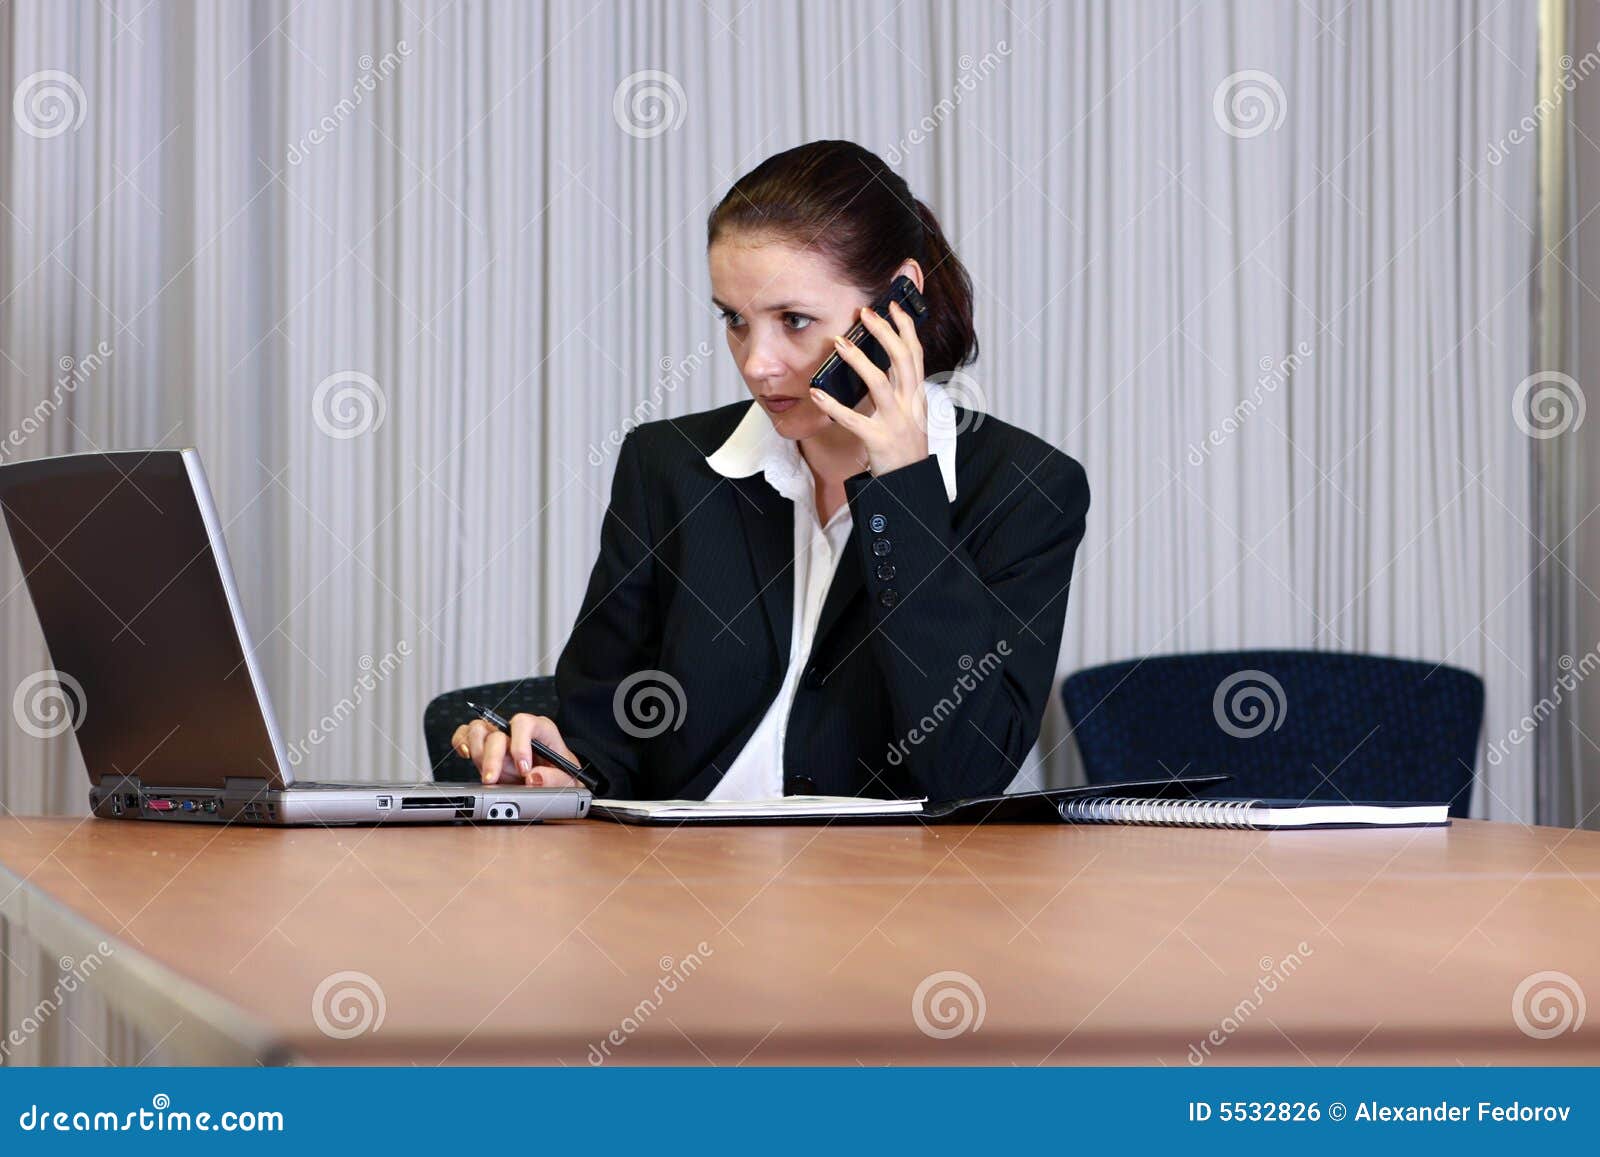 Business women stock photo. Image of professional, lady - 5532826